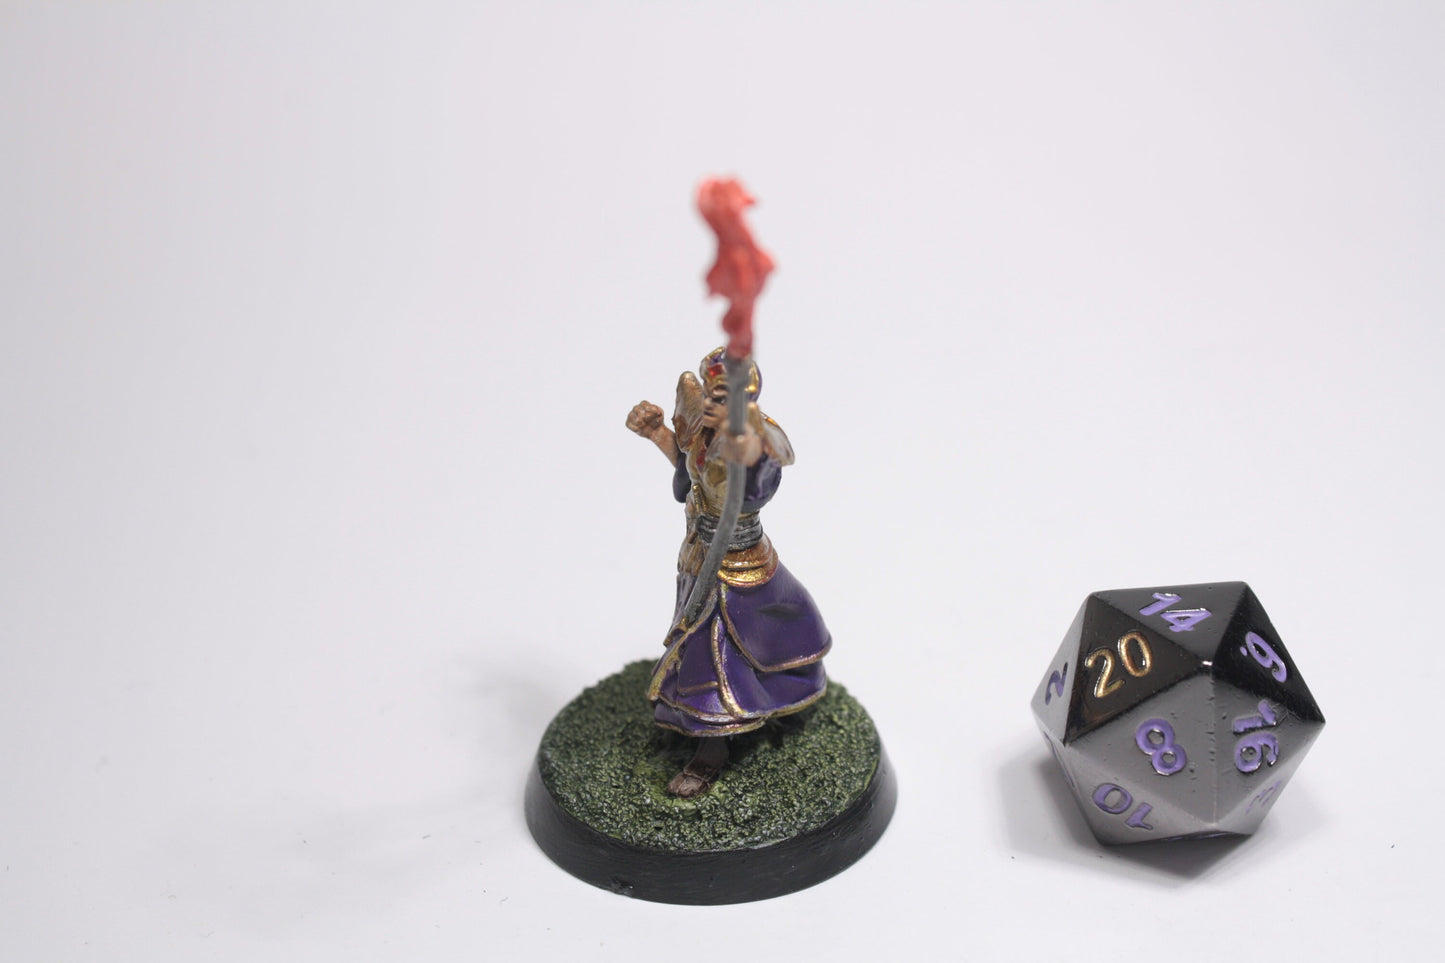 Human Warlock D&D Miniature / Wizard / Sorcerer / Druid - Custom Hand Painted DnD Mini